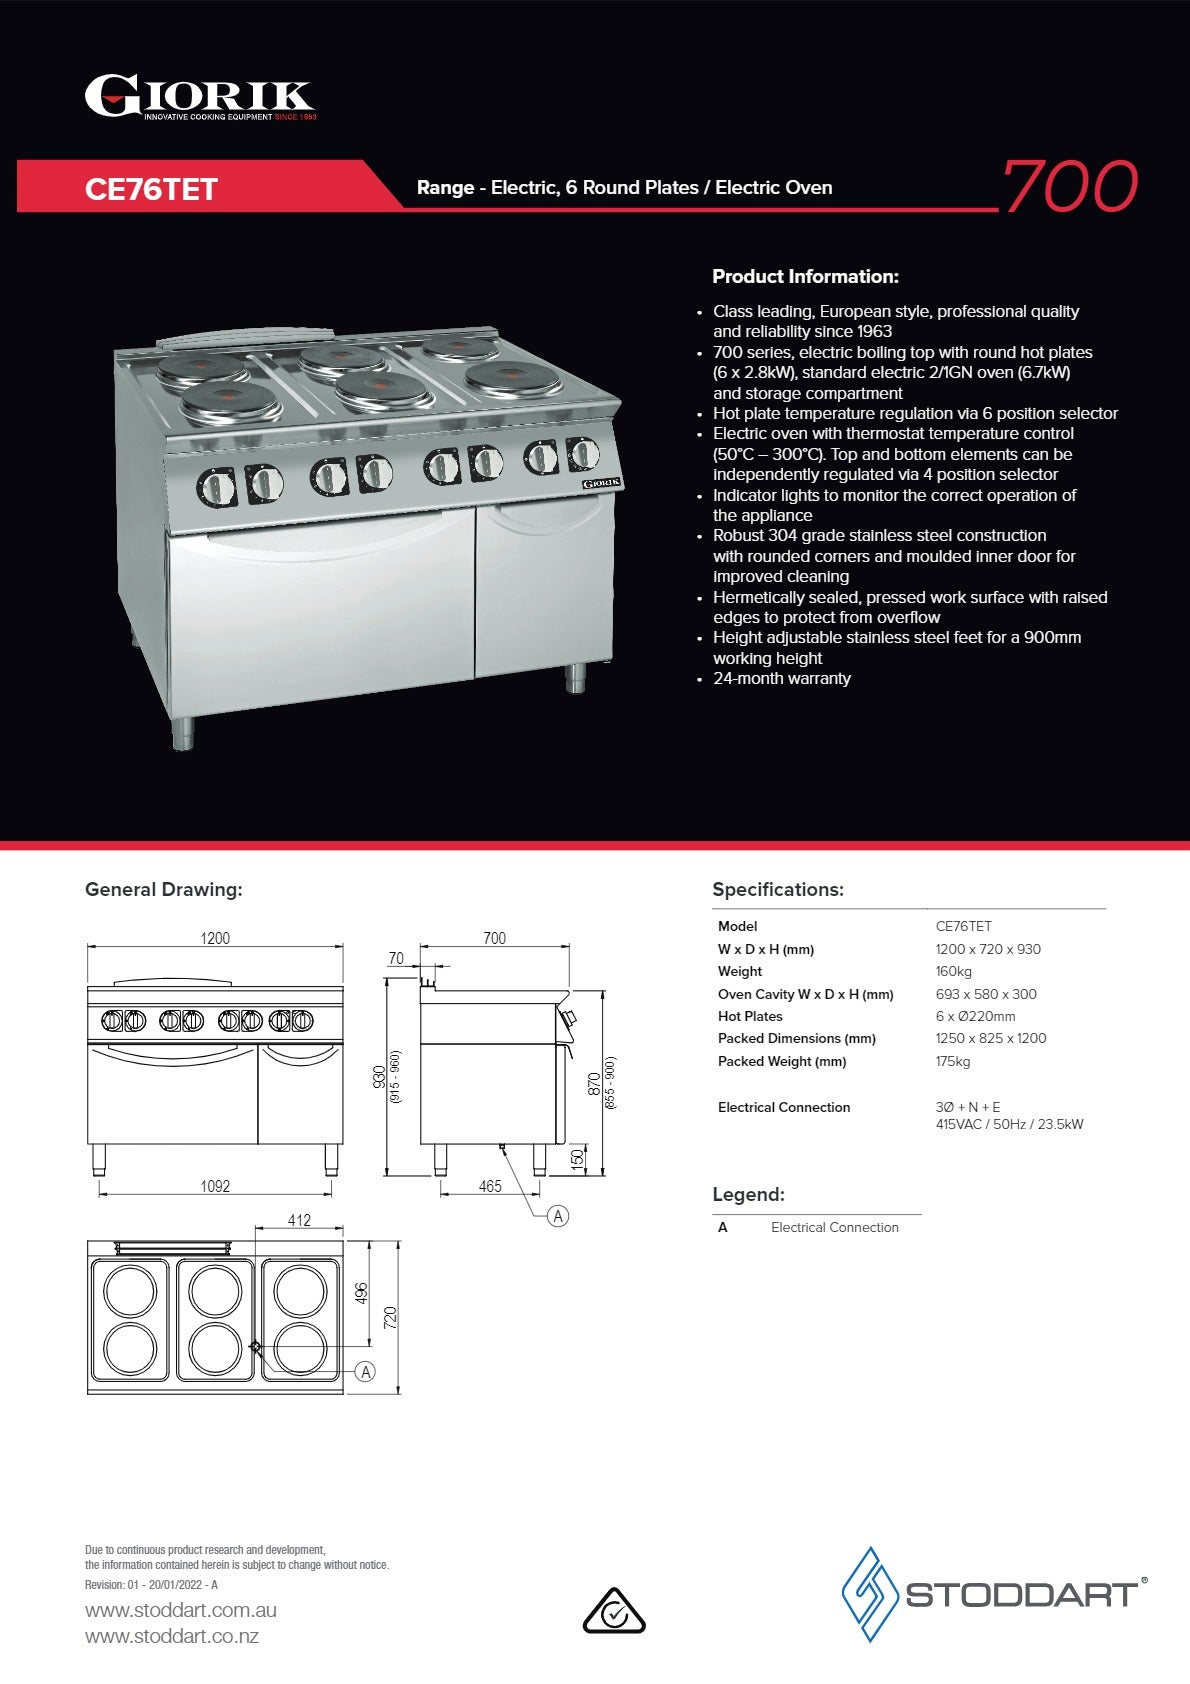 Thumbnail - Giorik 700 Series CE76TET - Range Oven